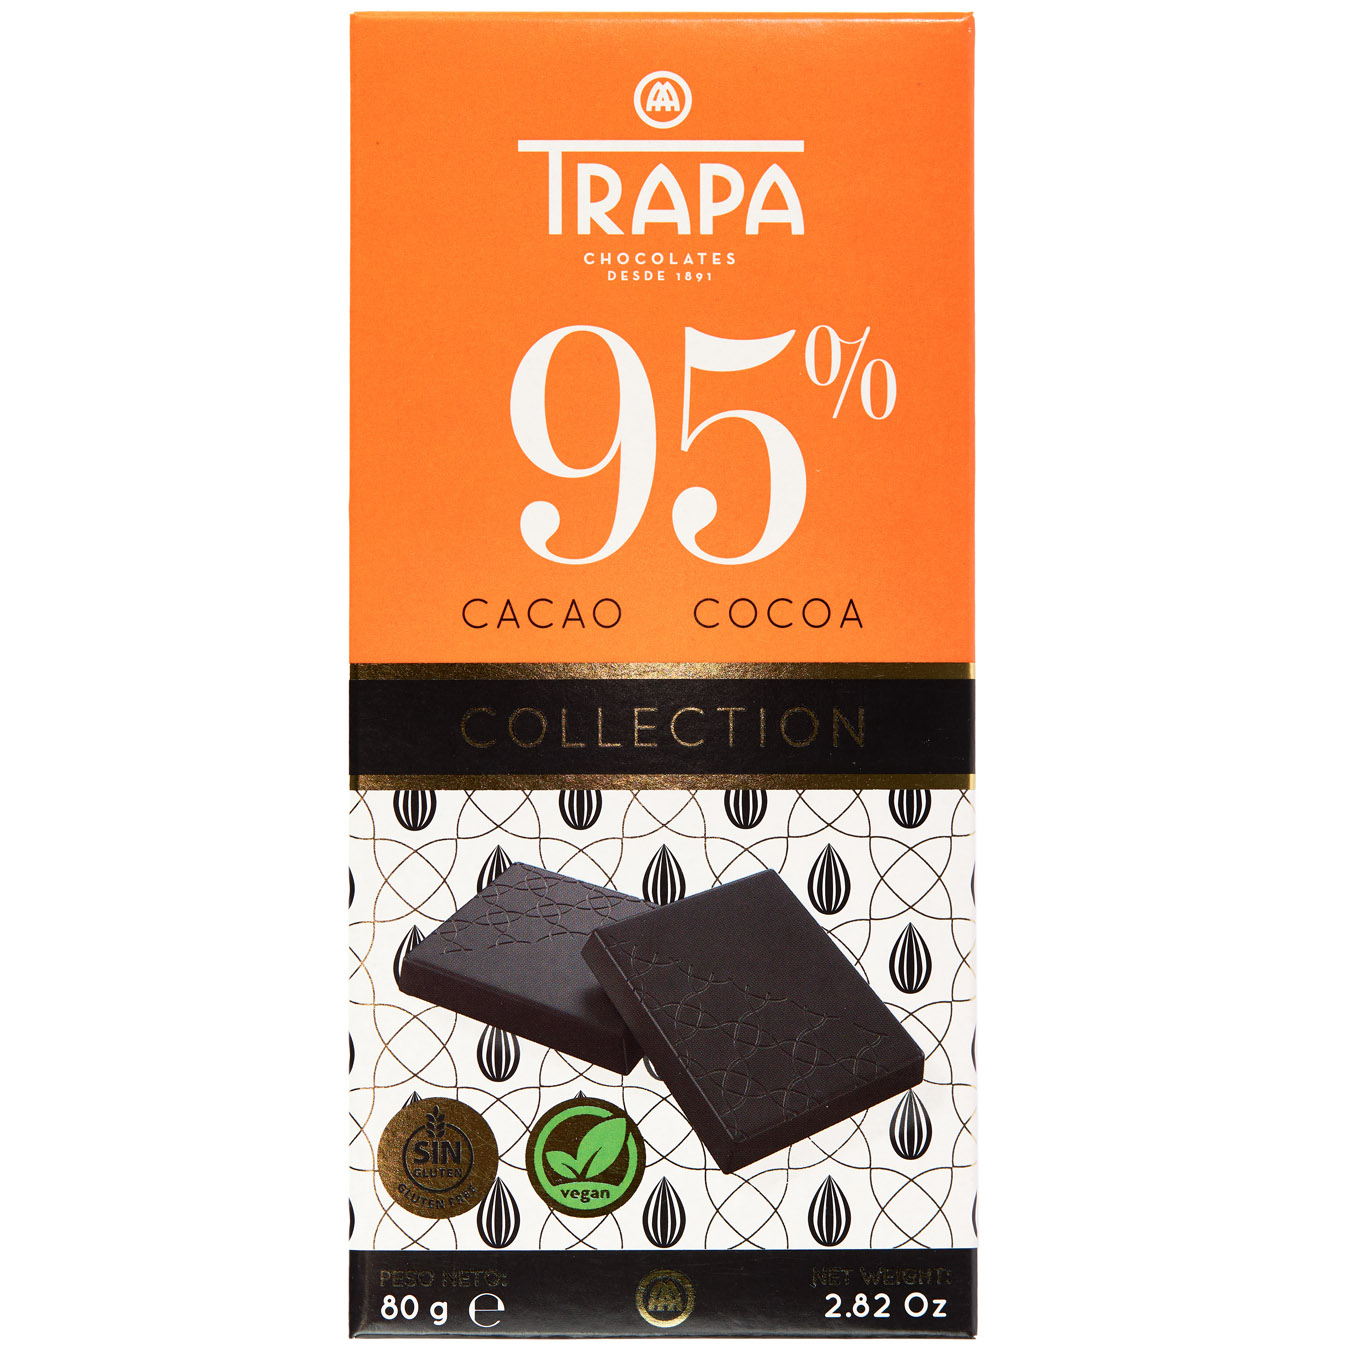 Trapa Collection vegan dark сhocolate cocoa 95% 80g